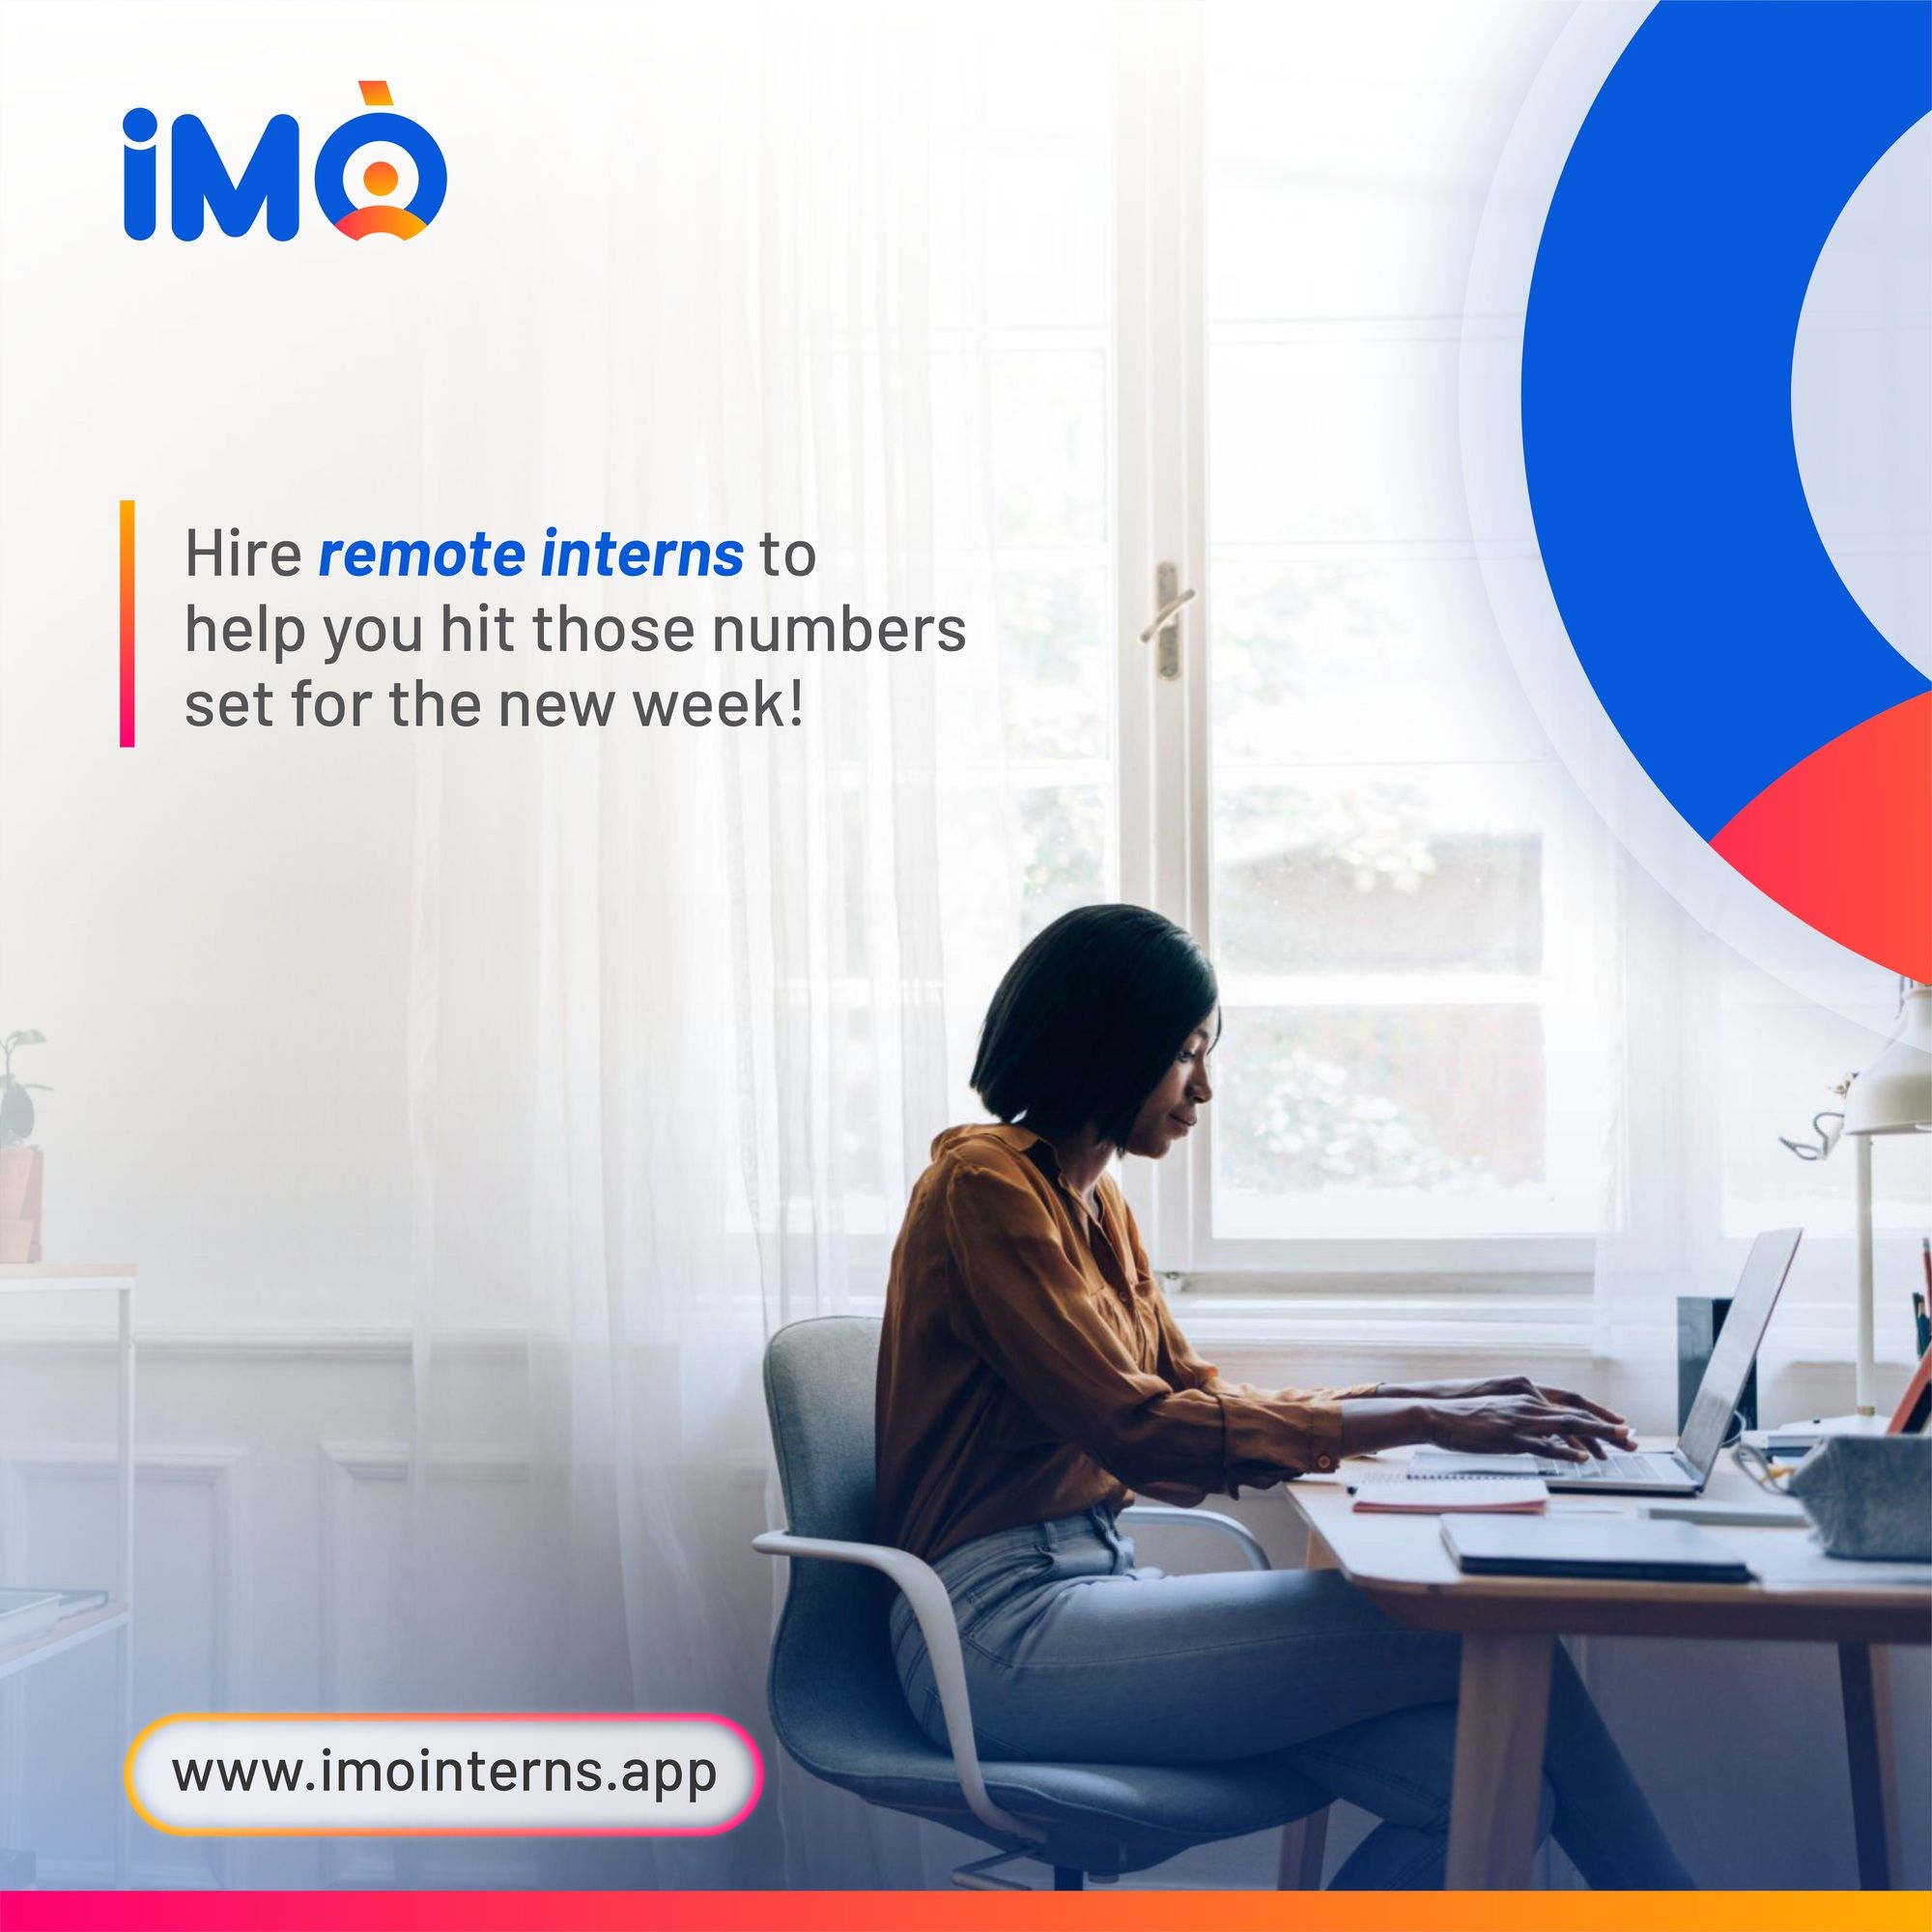 IMO Services Ltd